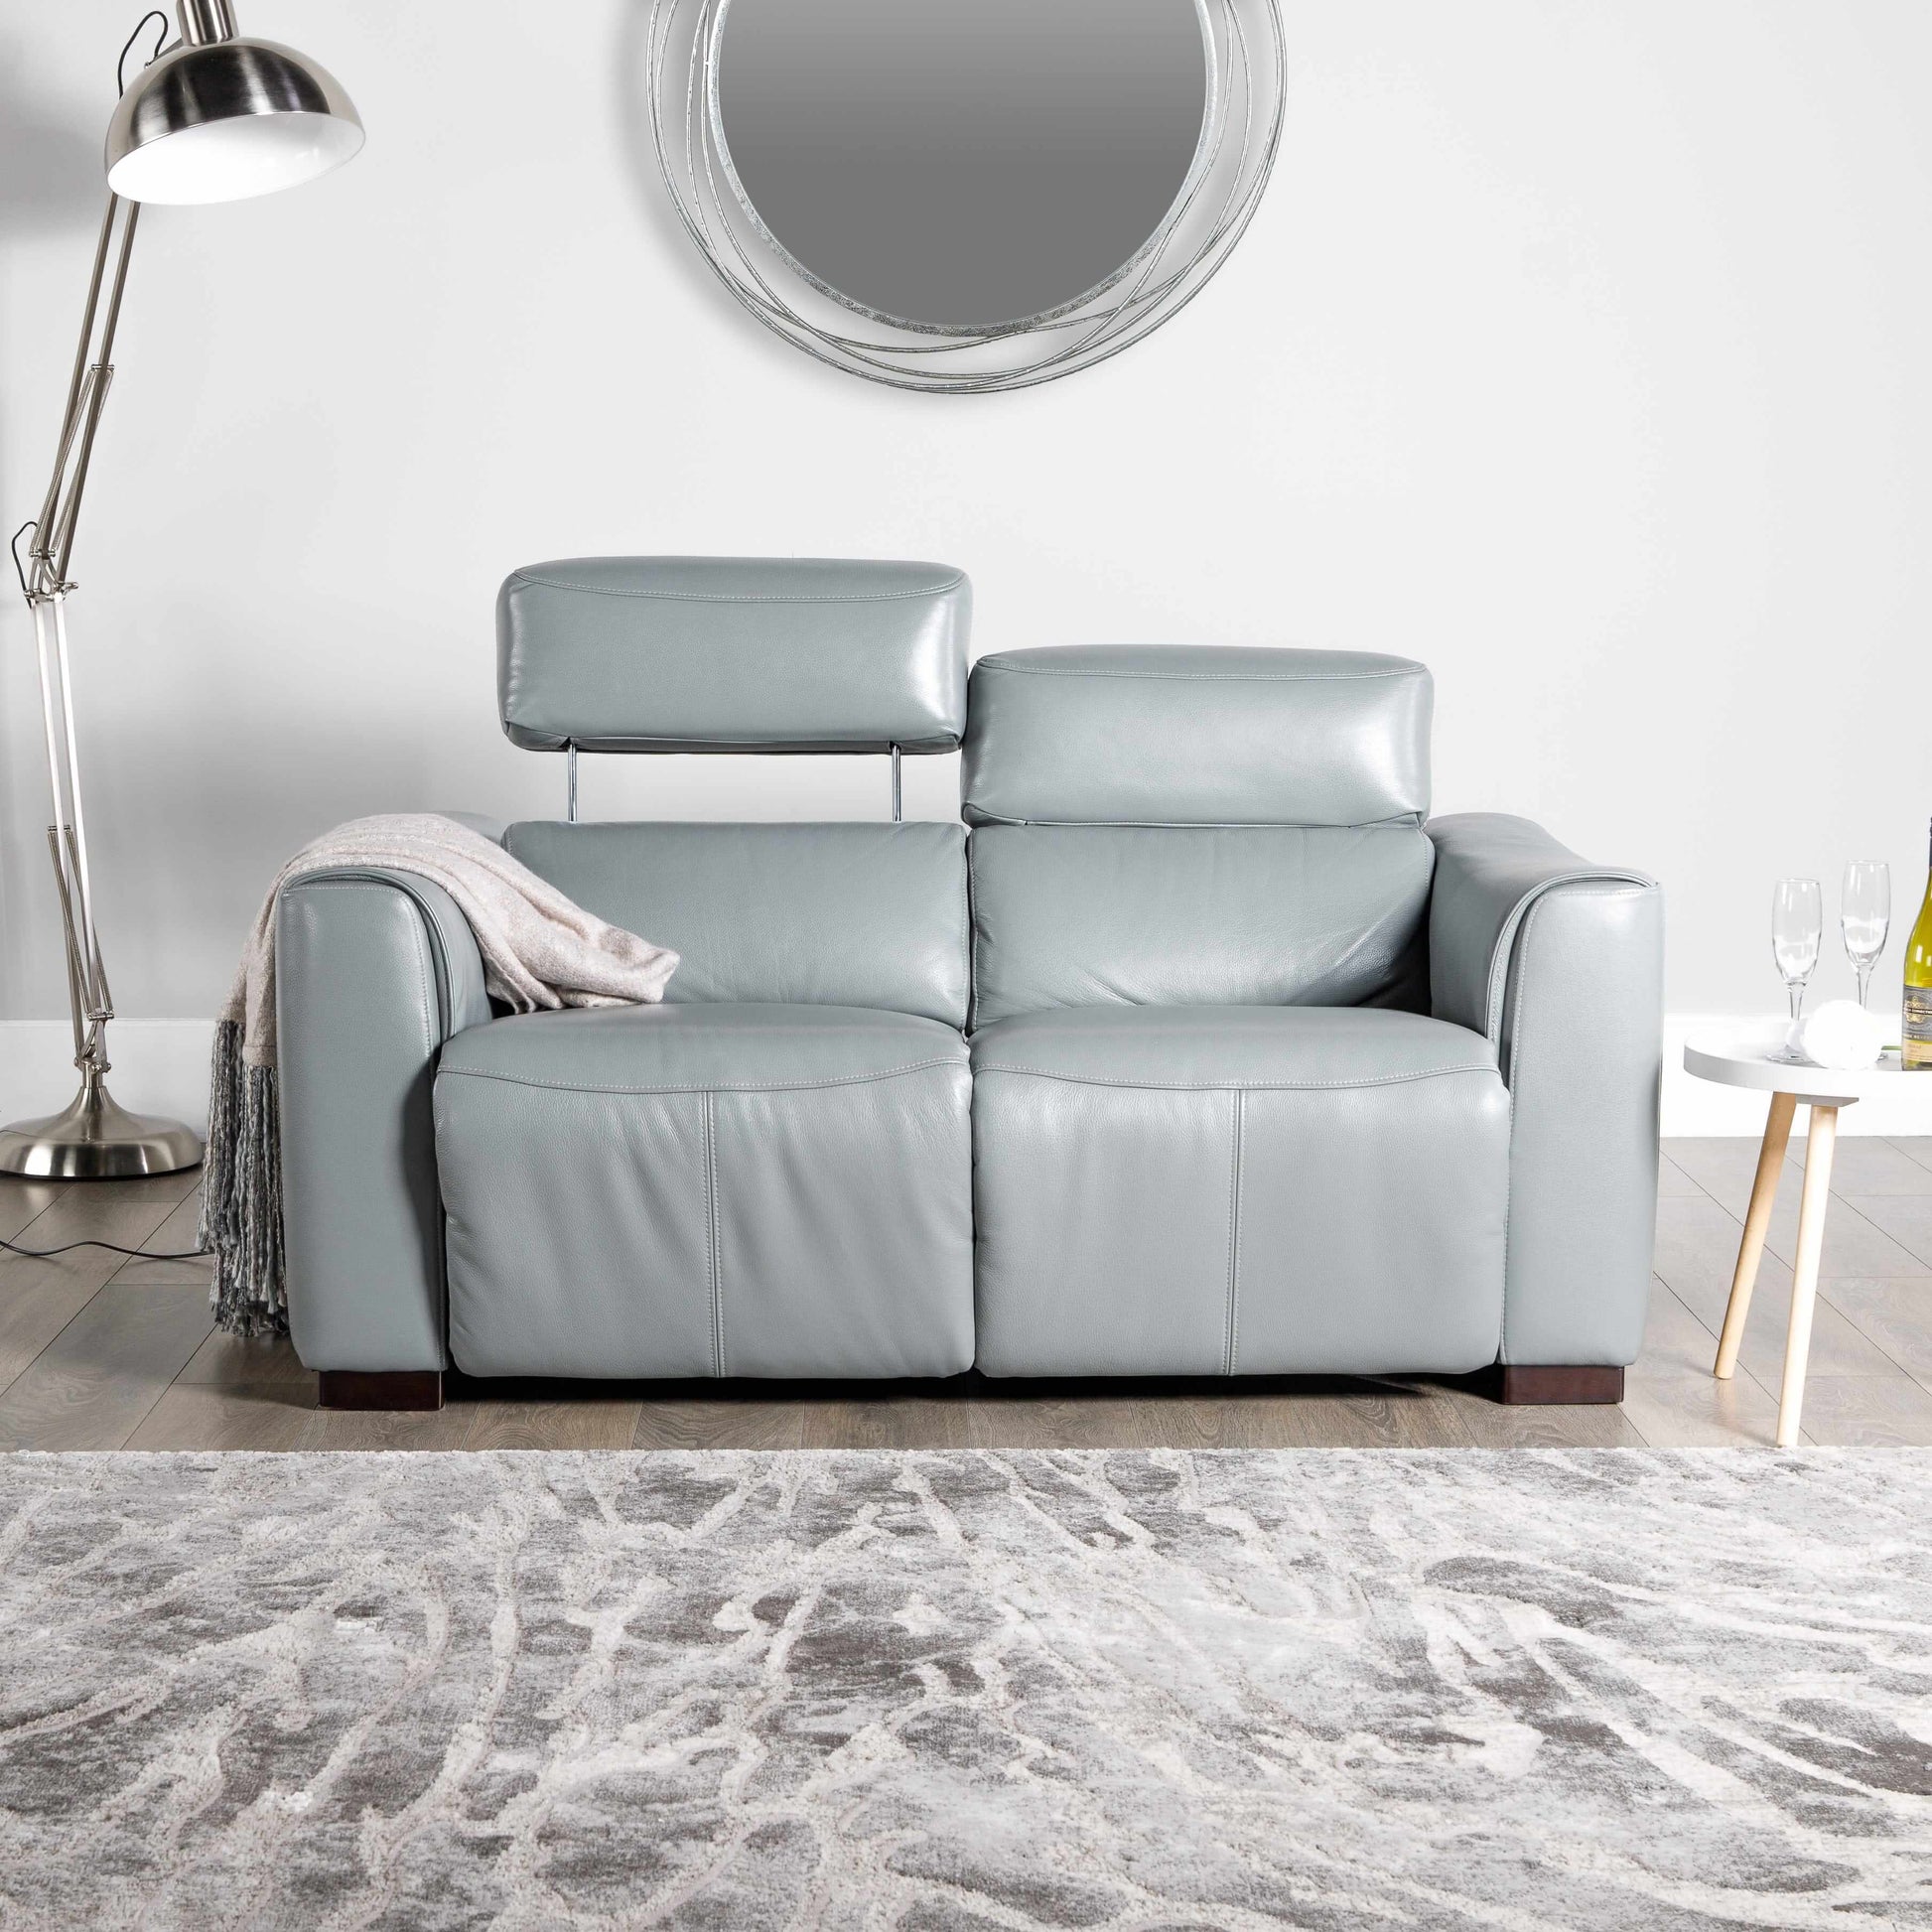 Furniture  -  Comfort King Ozark 2 Seat Electric Reclining Sofa  -  50153196